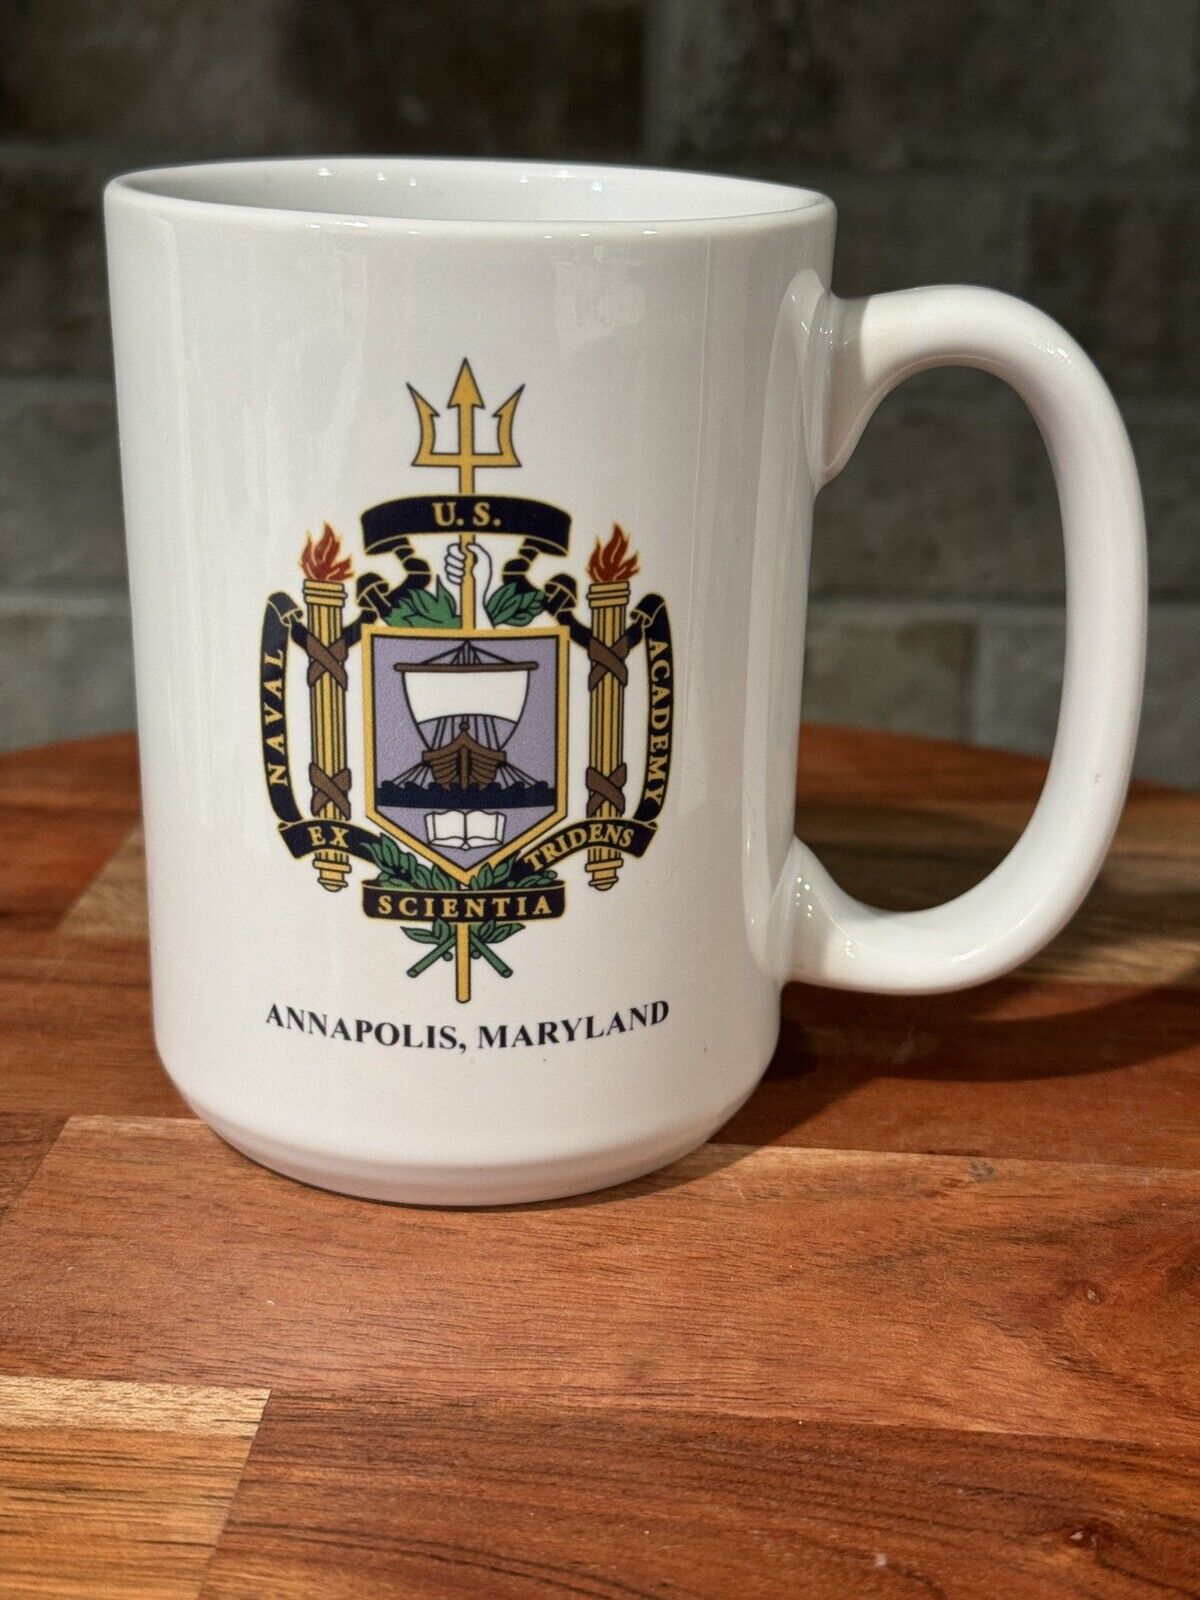 U.S. NAVAL ACADEMY ~ Navy ~ Coffee Tea Mug Cup Annapolis, Maryland